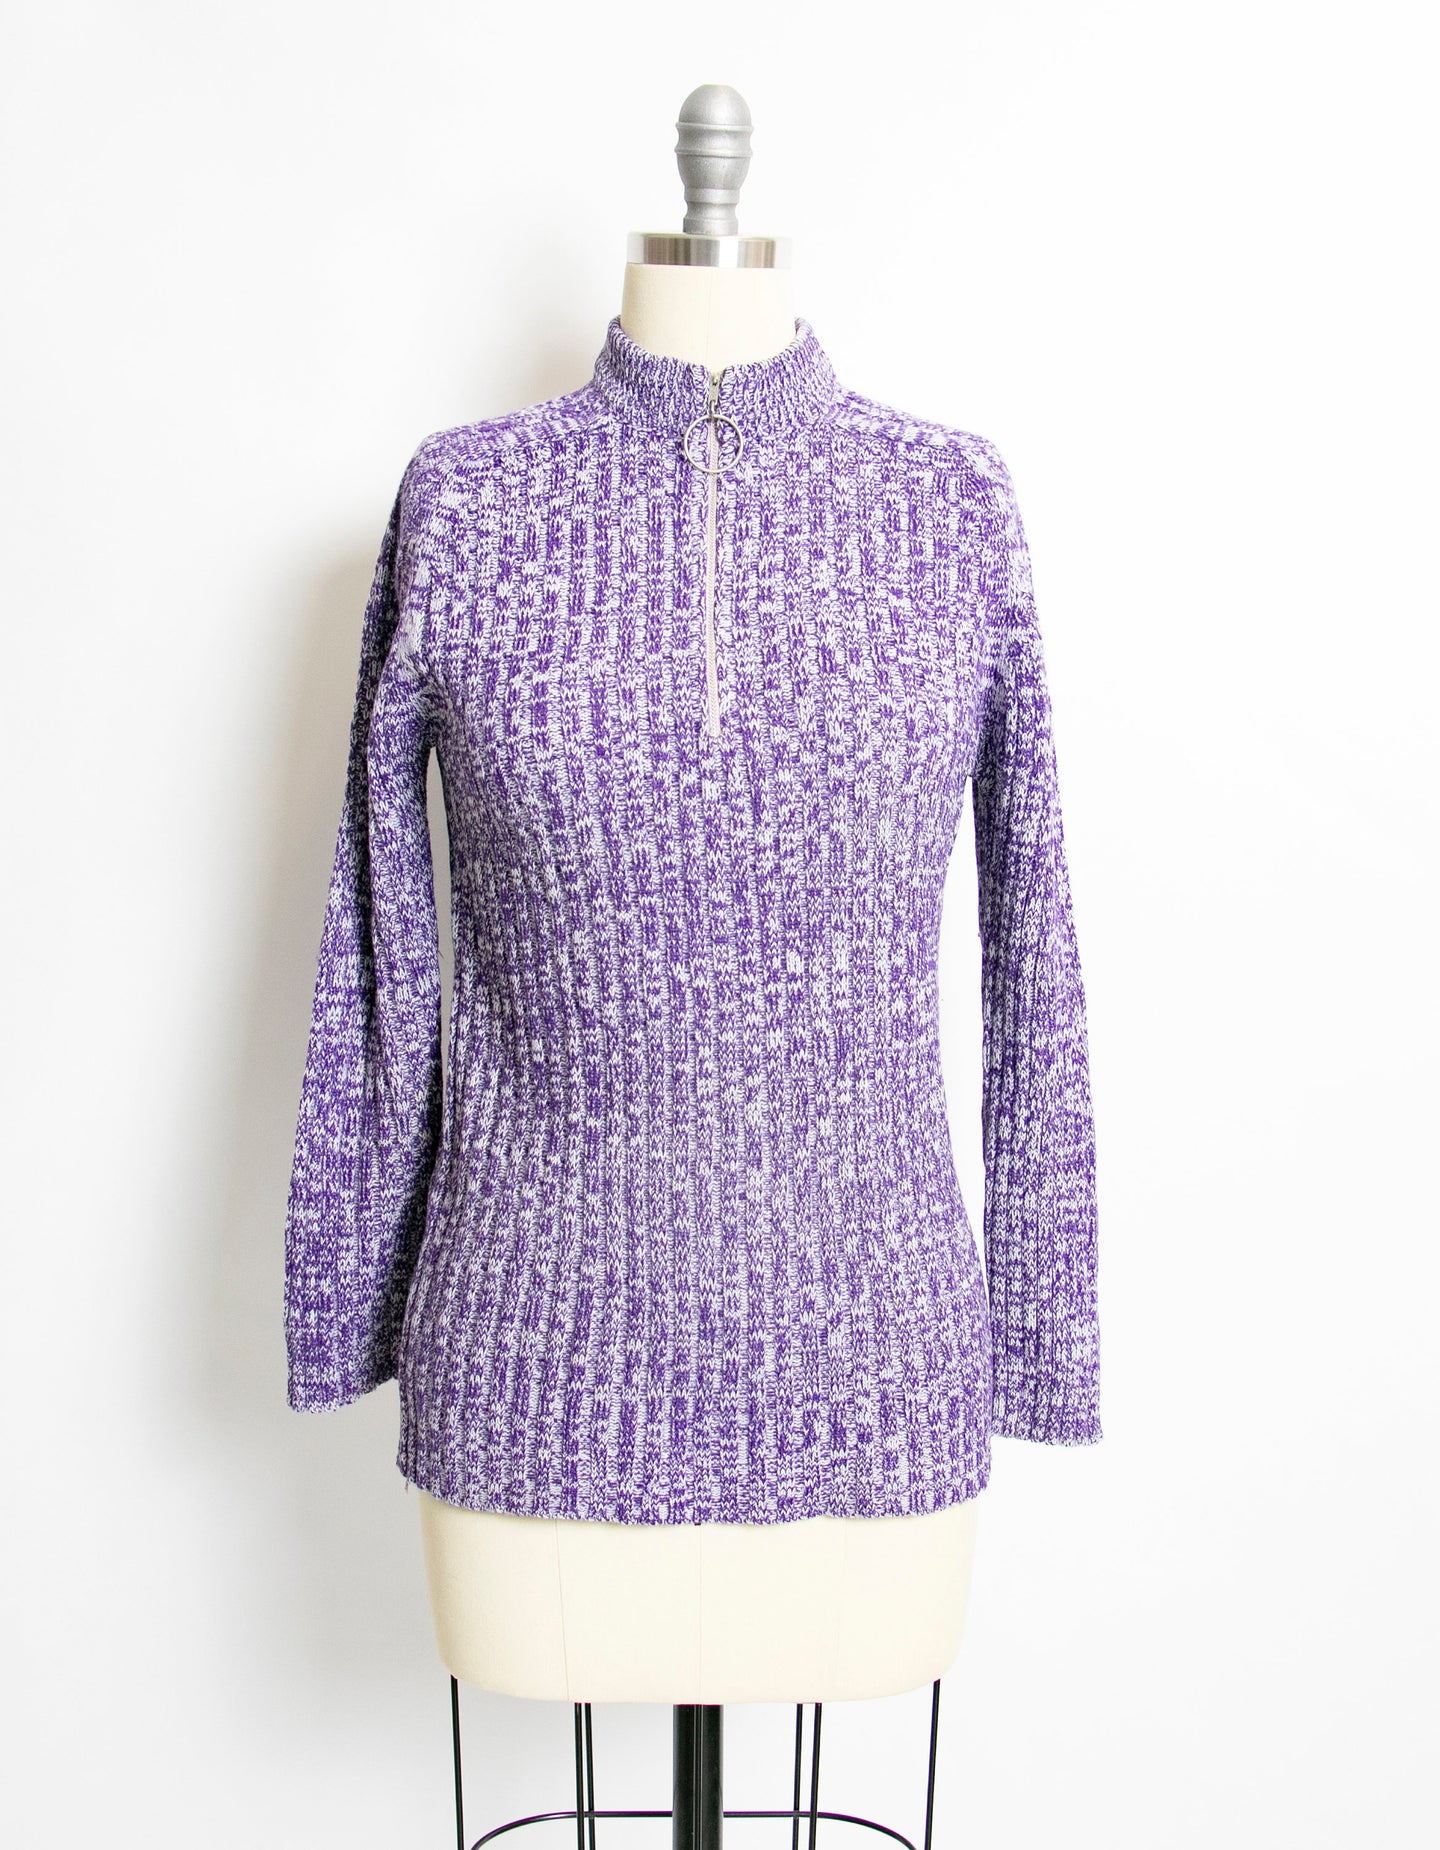 1970s Sweater Knit Purple Heathered Zip Up S